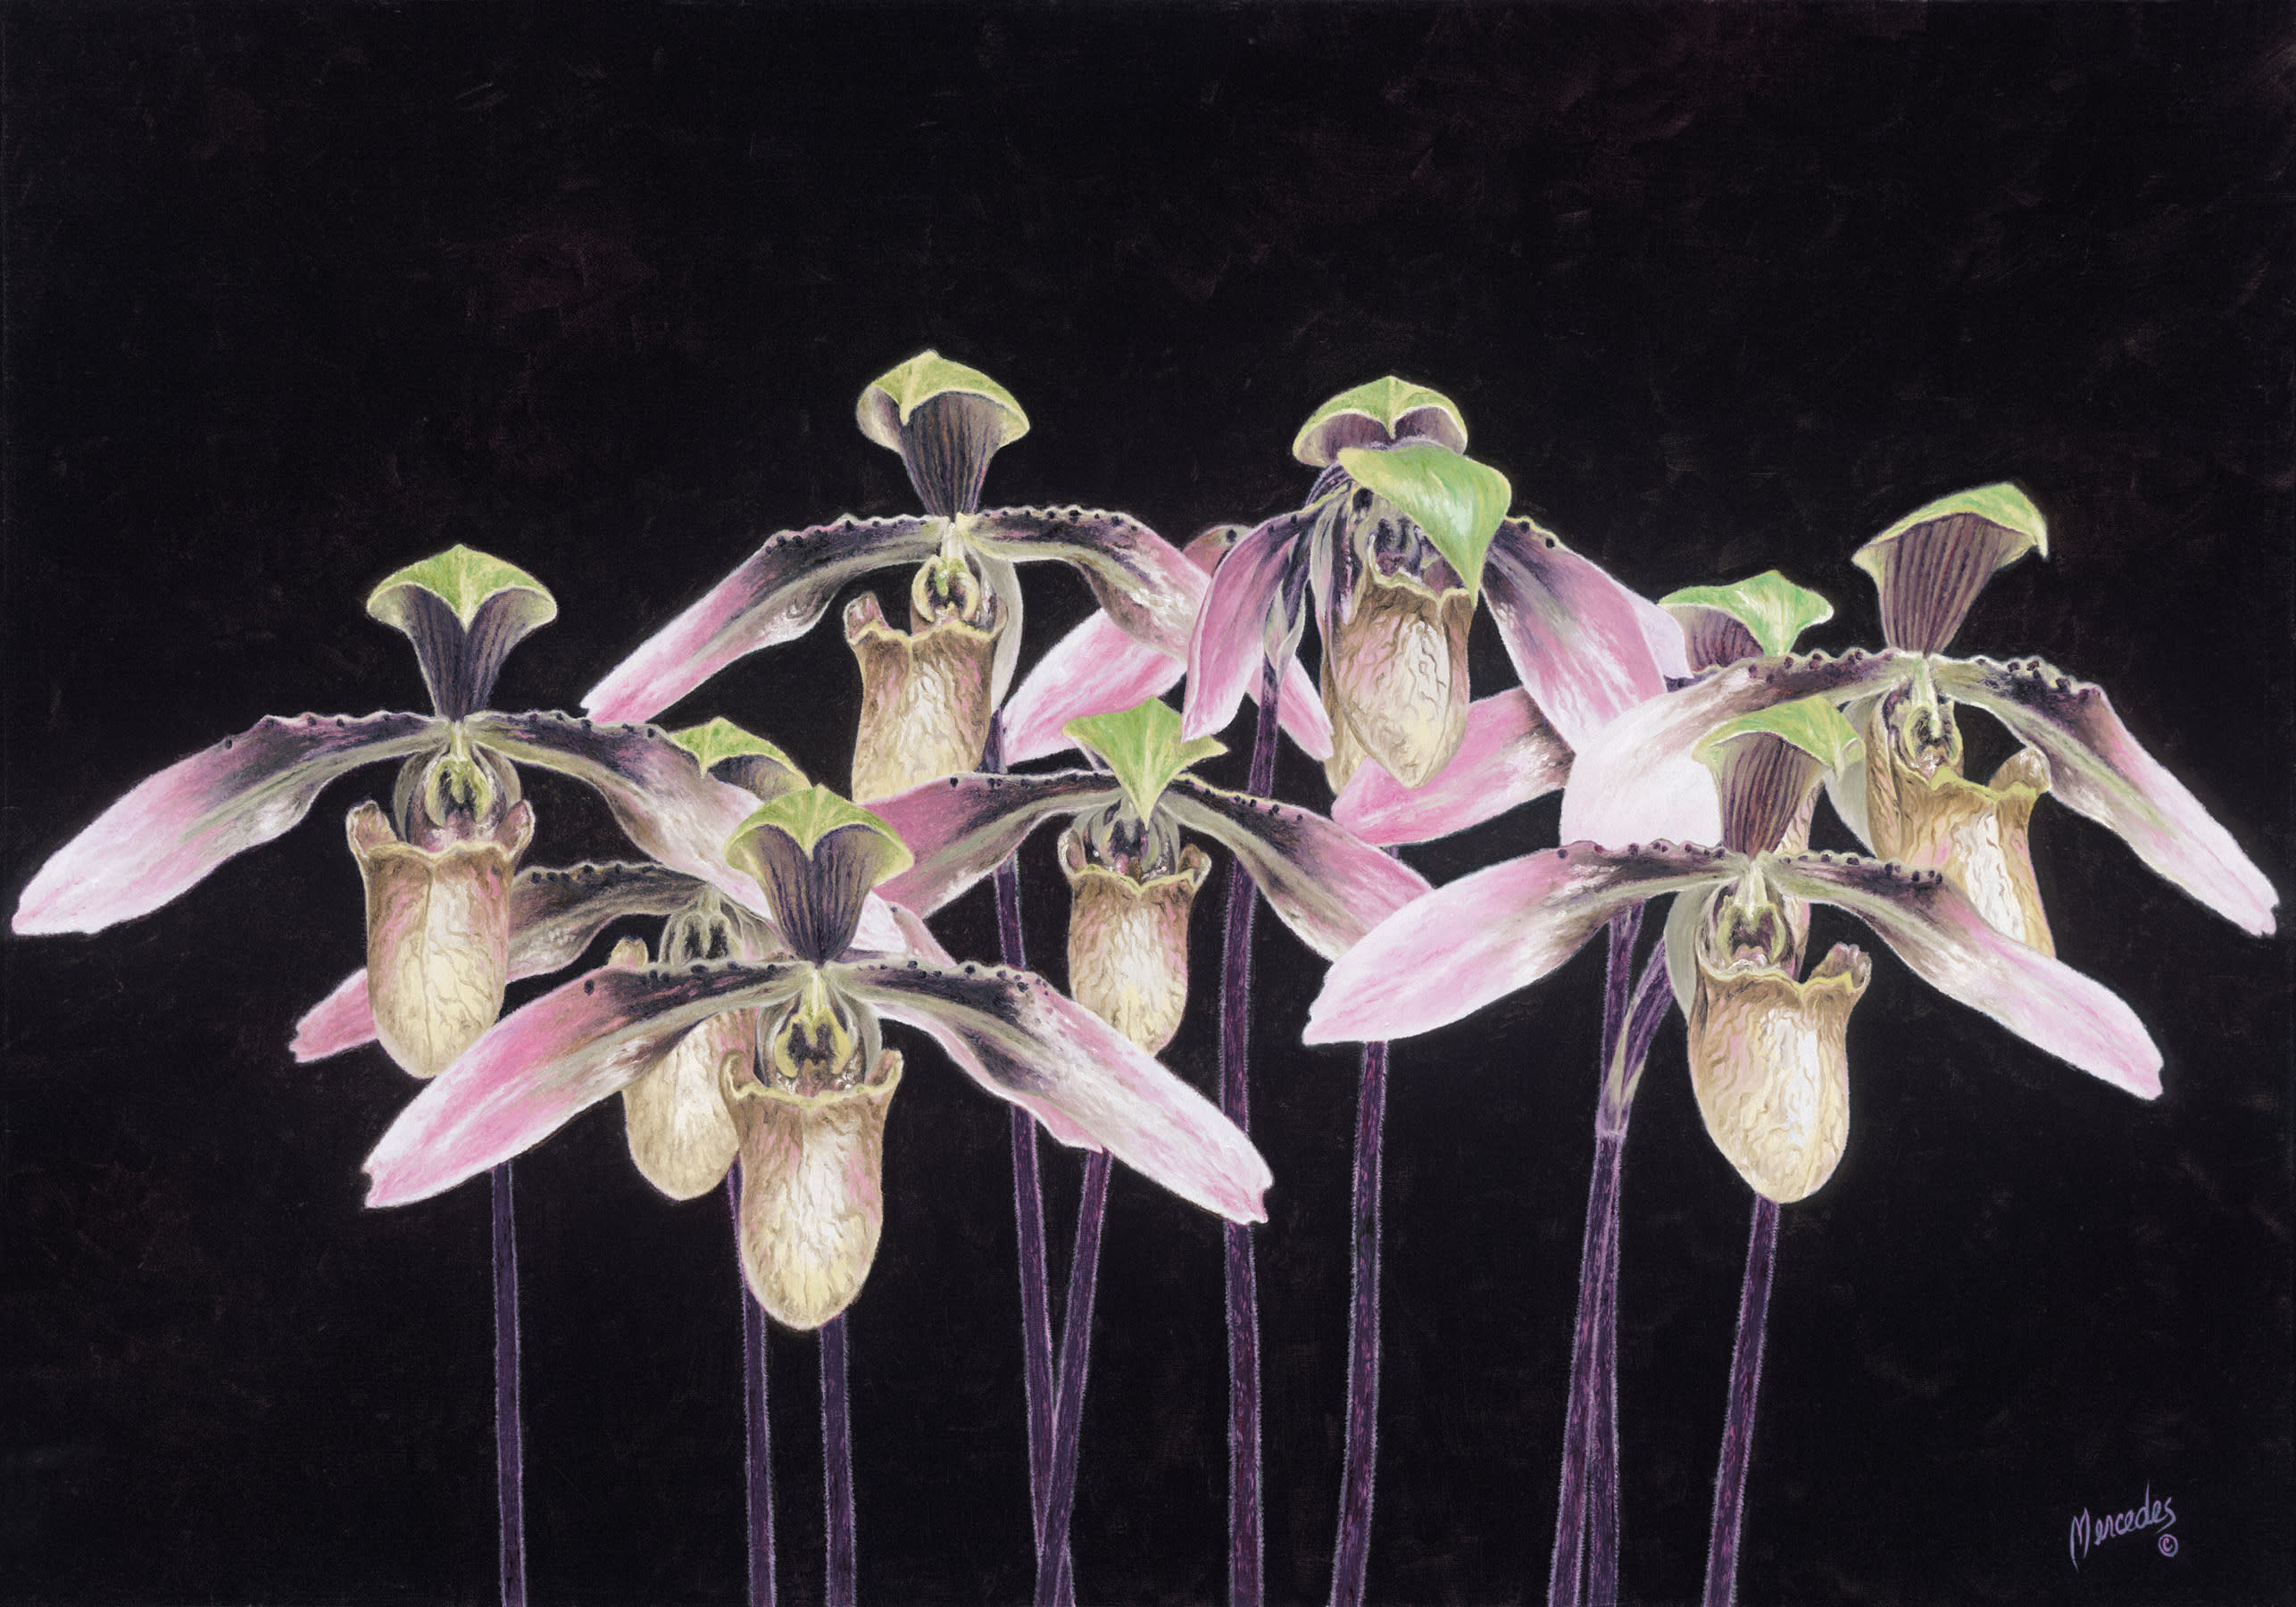 Orchids  by gailoyer mercedes oil14hx20w  bdsdvc